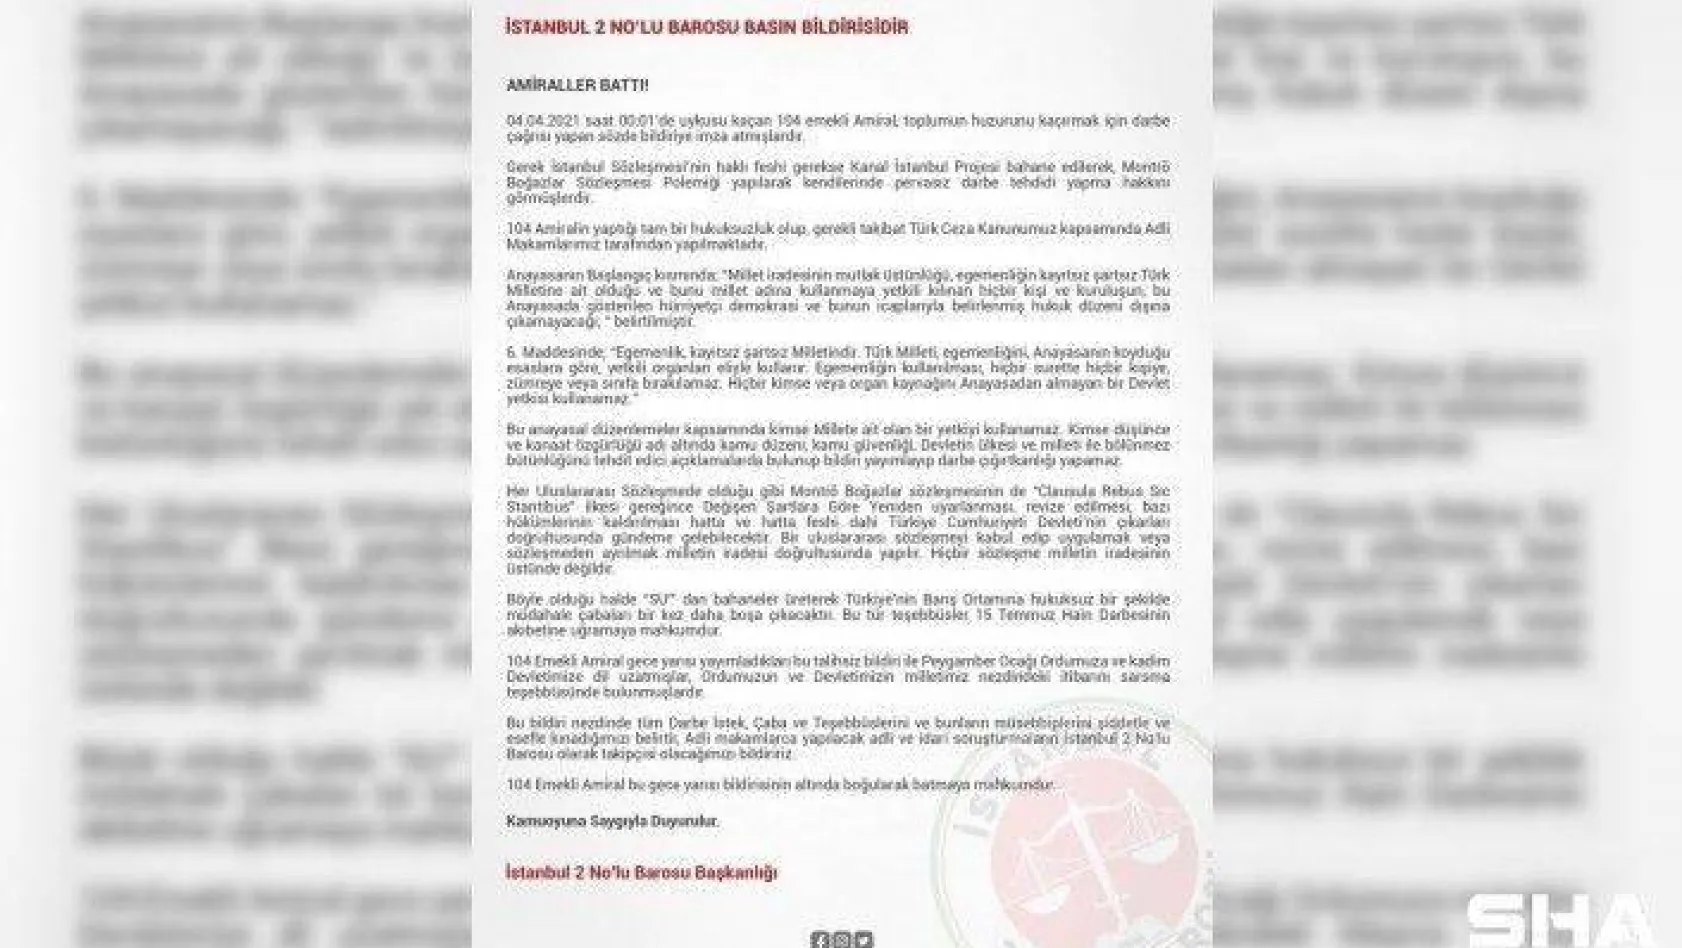 İstanbul 2 No'lu Barosu: &quot104 emekli amiral bildirinin altında boğularak batmaya mahkum"